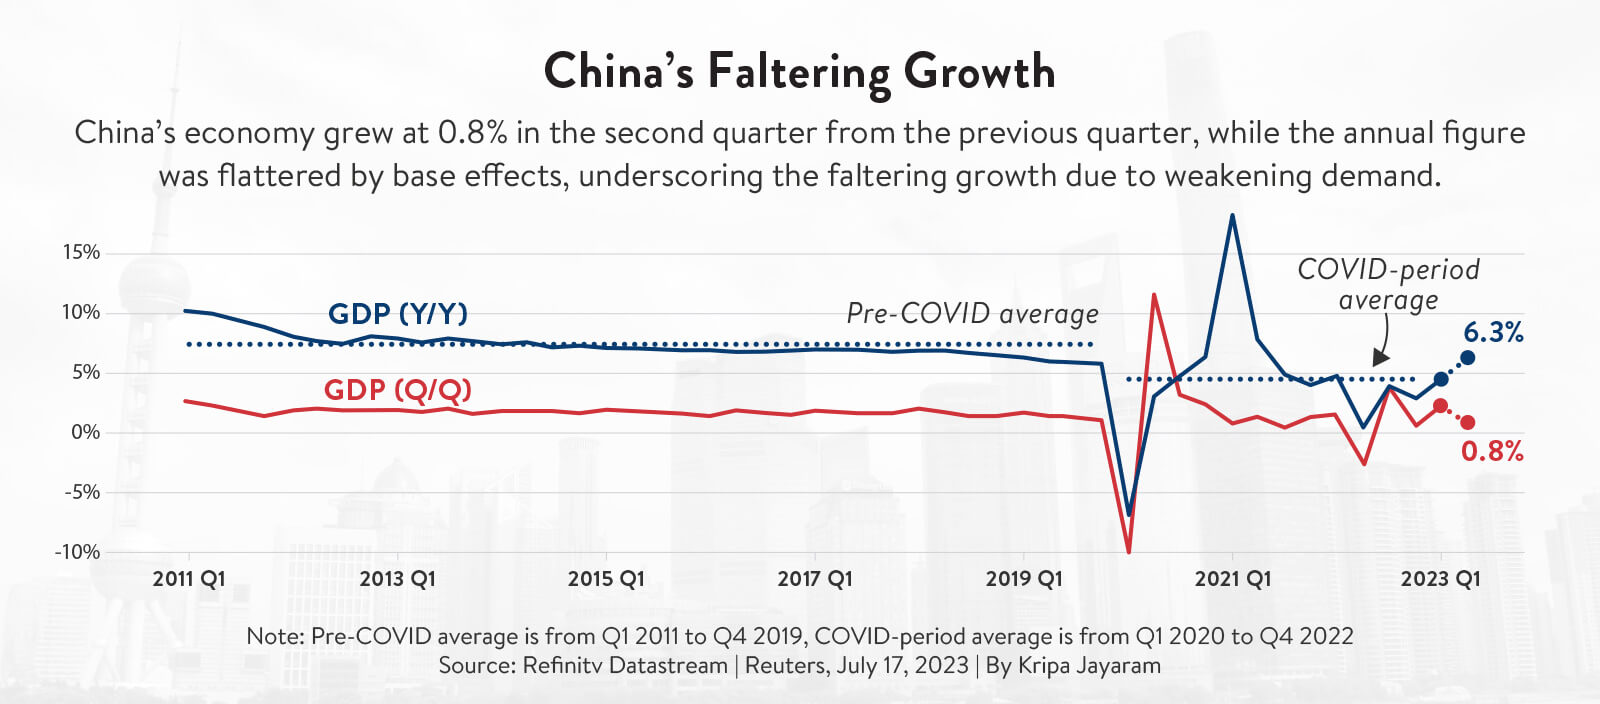 China's Faltering Growth